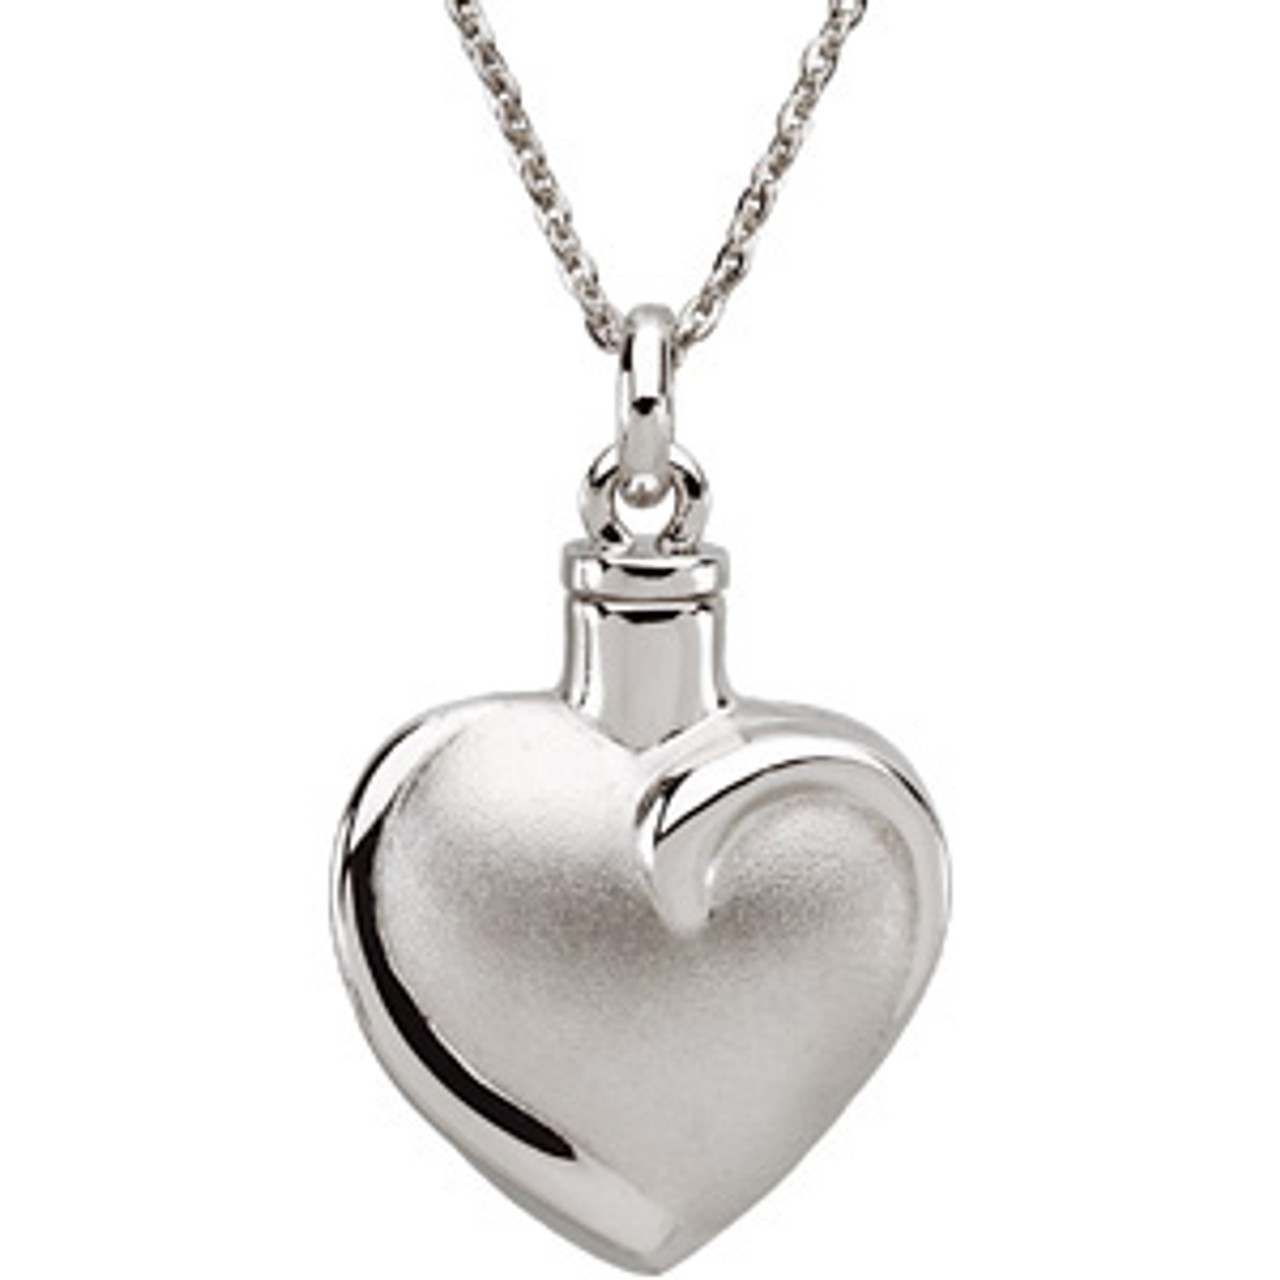 Buy ATORSE® Retro Cross Crystal Heart Pendant Cremation Ash Holder Urn  Keepsake Necklace at Amazon.in